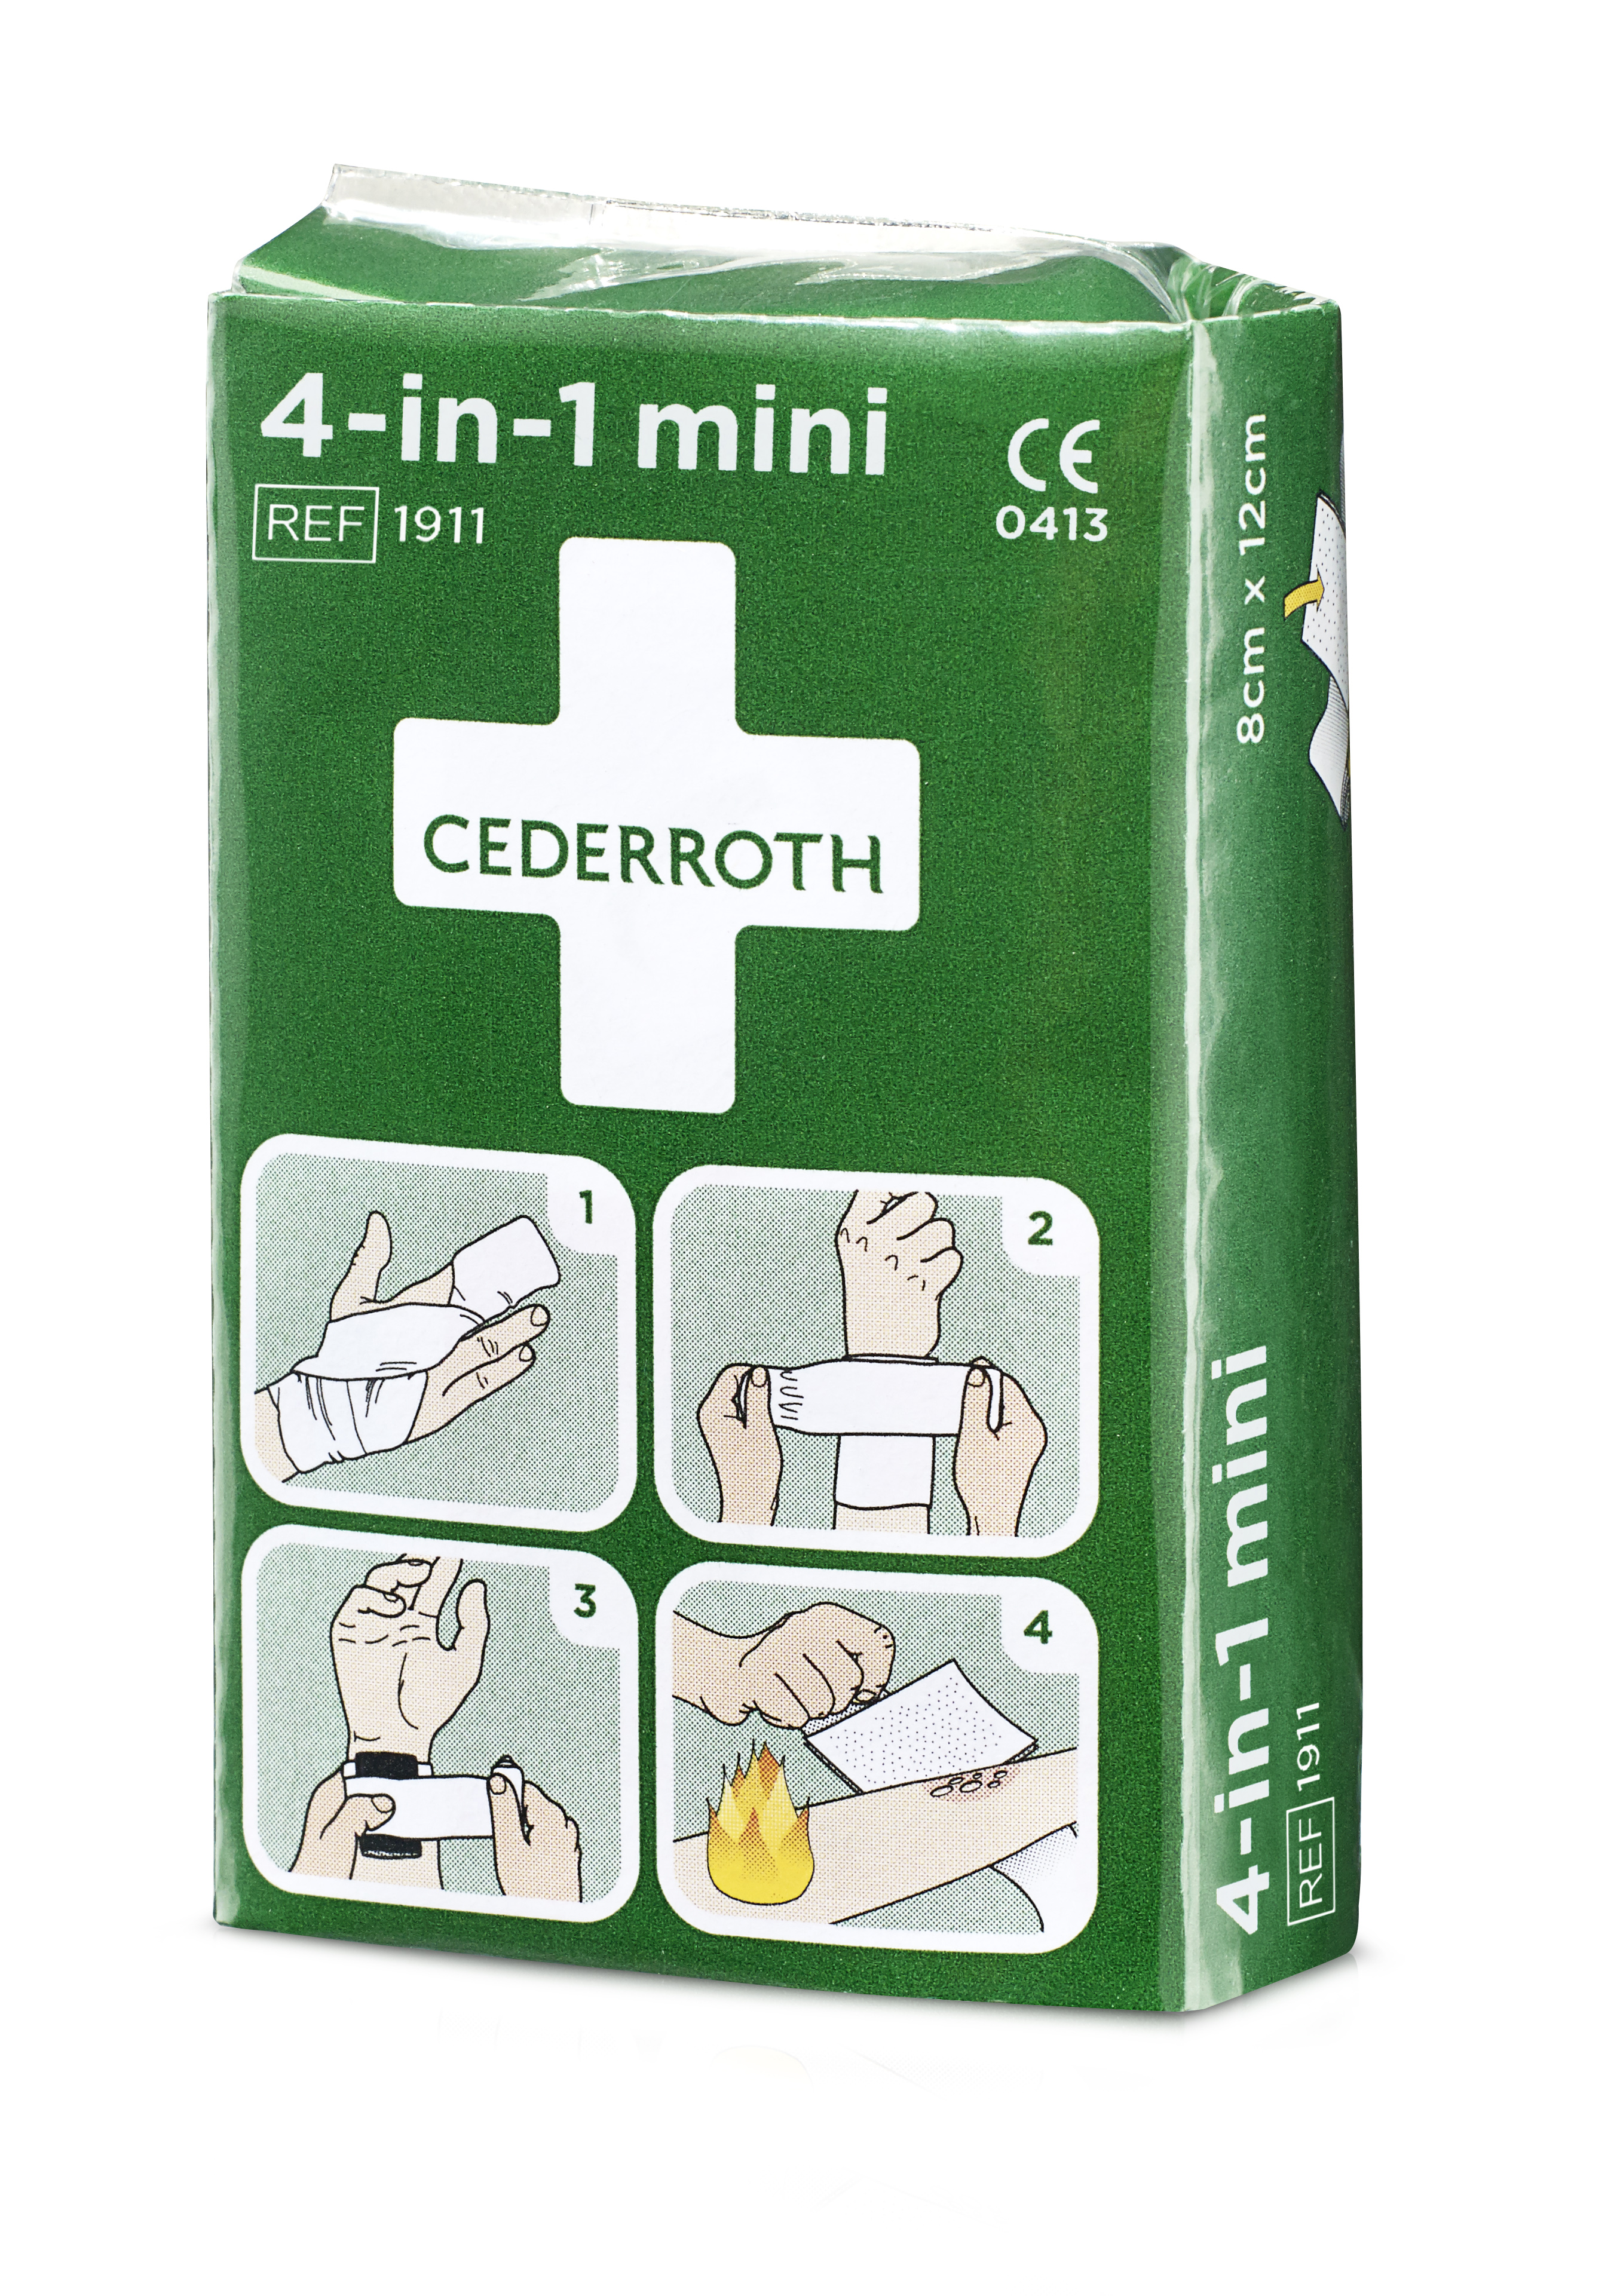 CEDERROTH 4-in-1 mini Blutstiller Wundverband